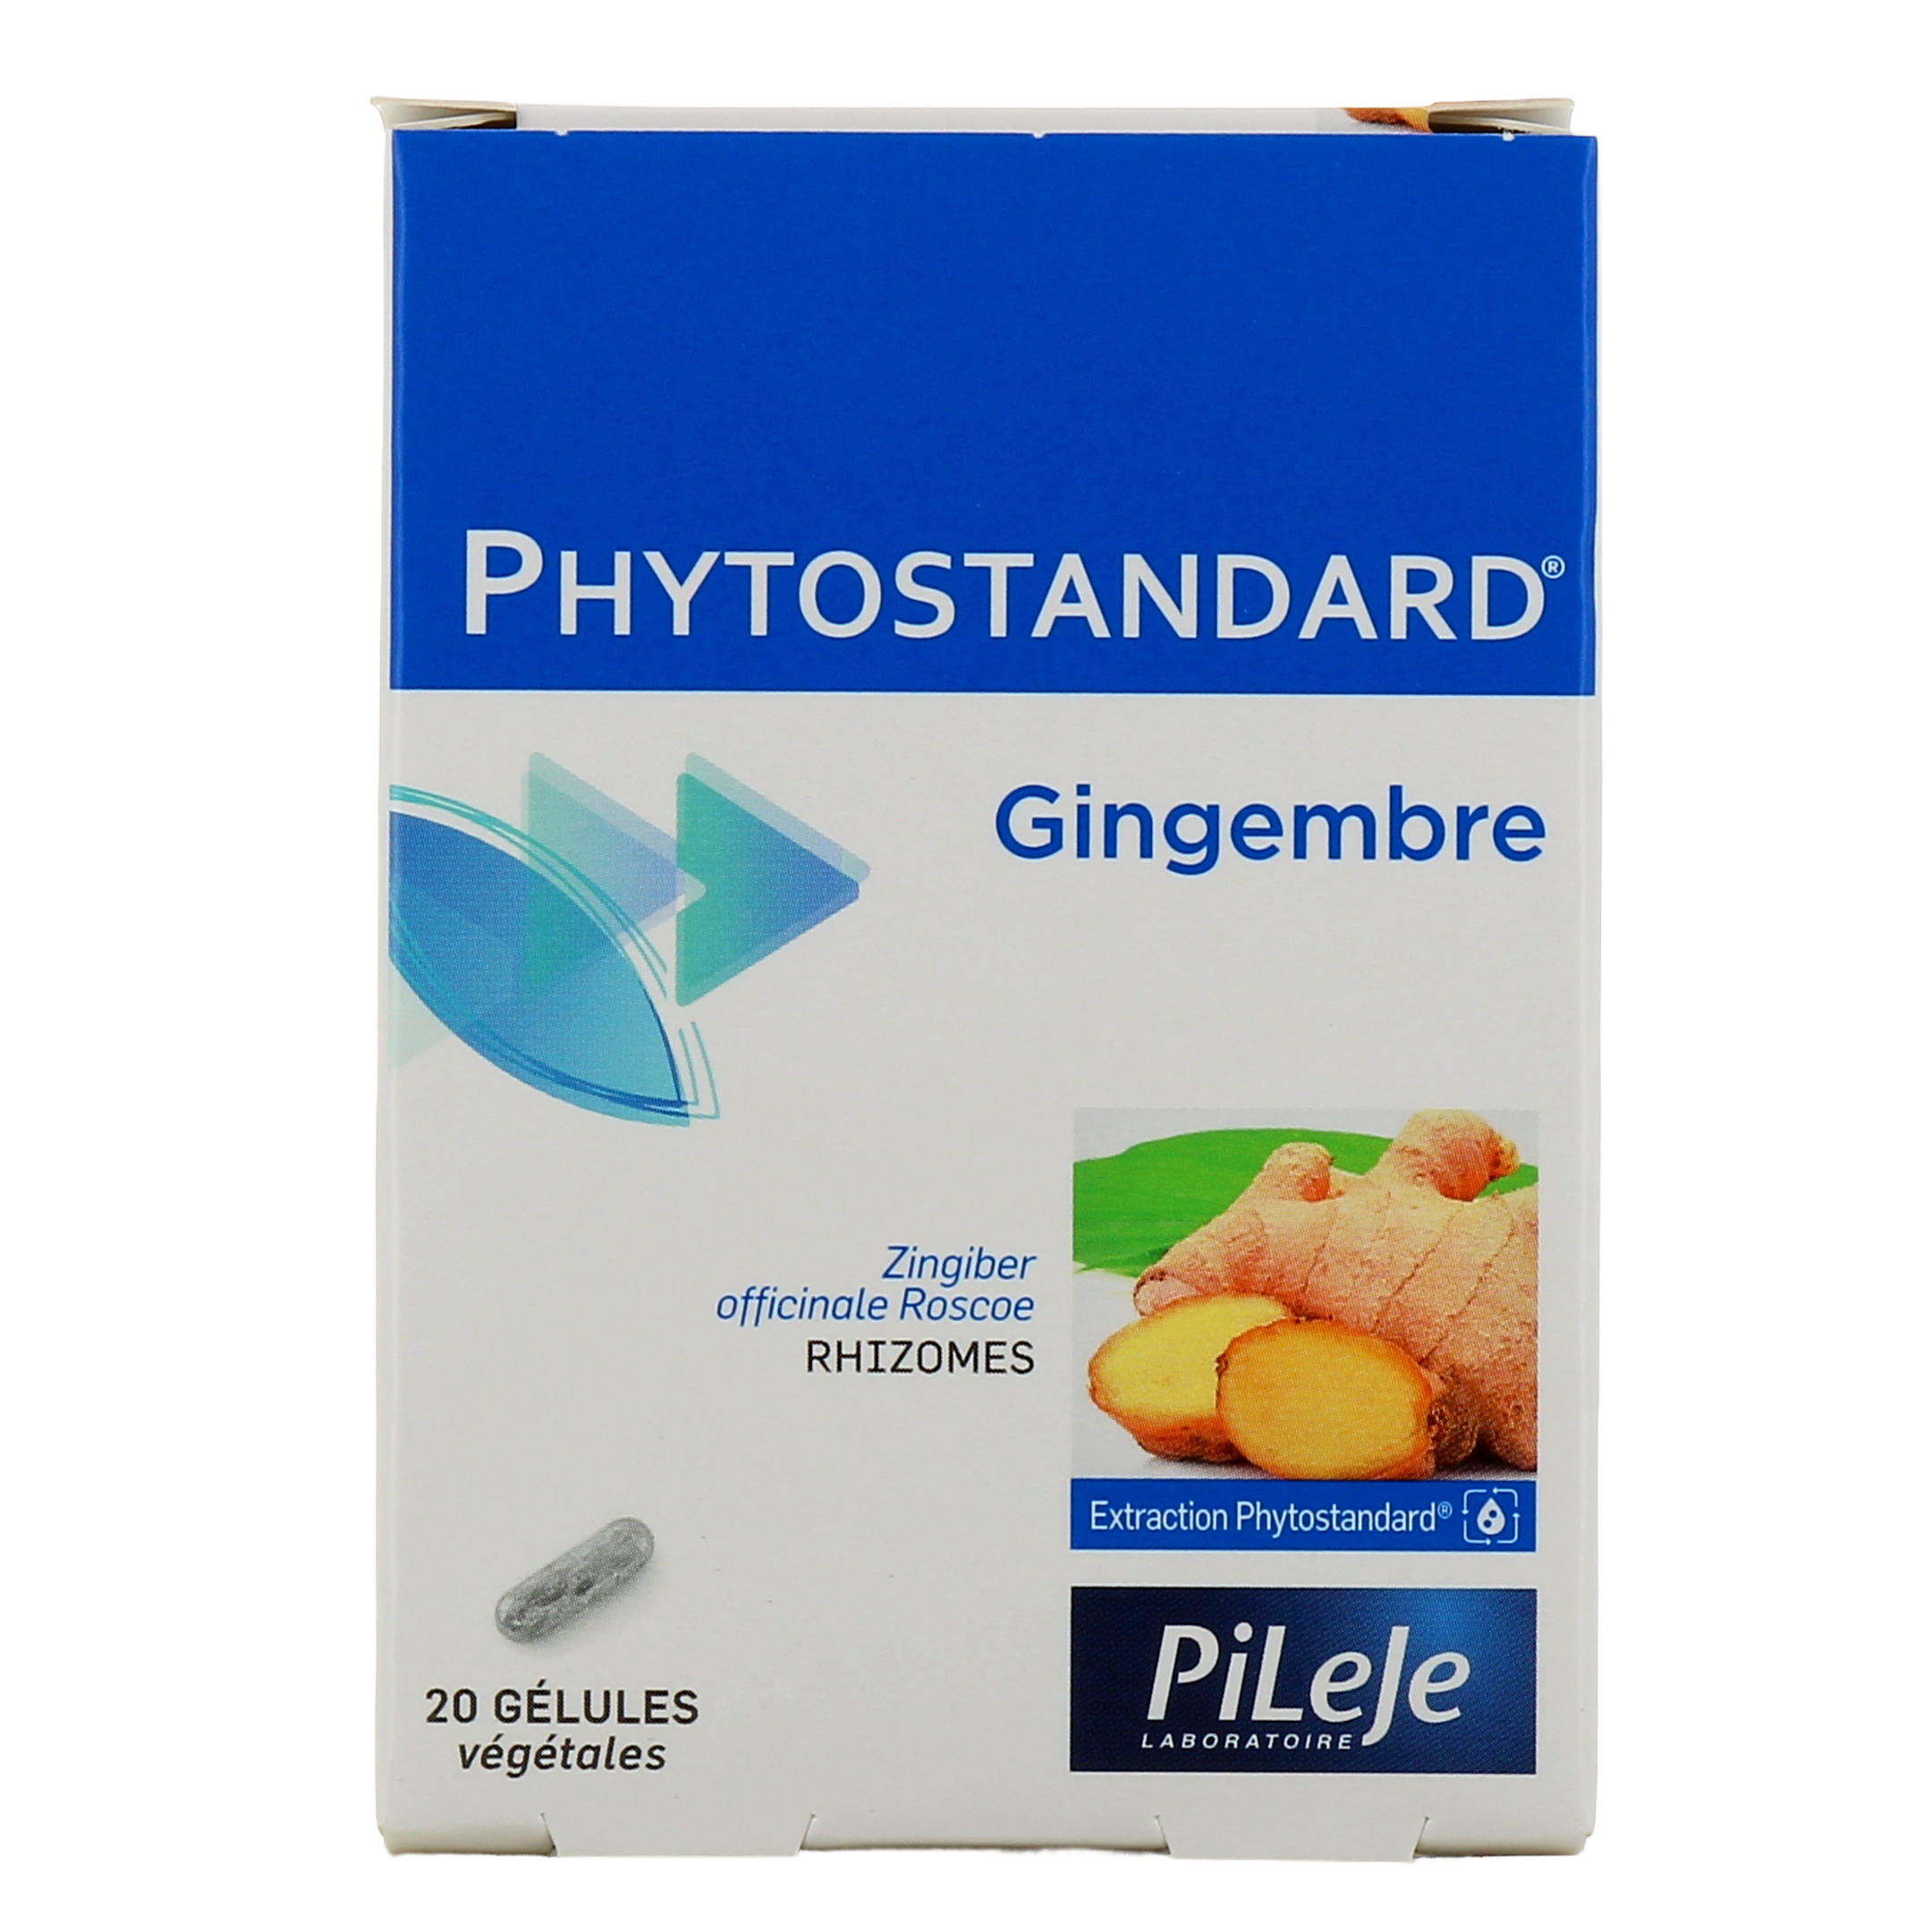 Phytostandard Gingembre digestion difficile 20 gélules